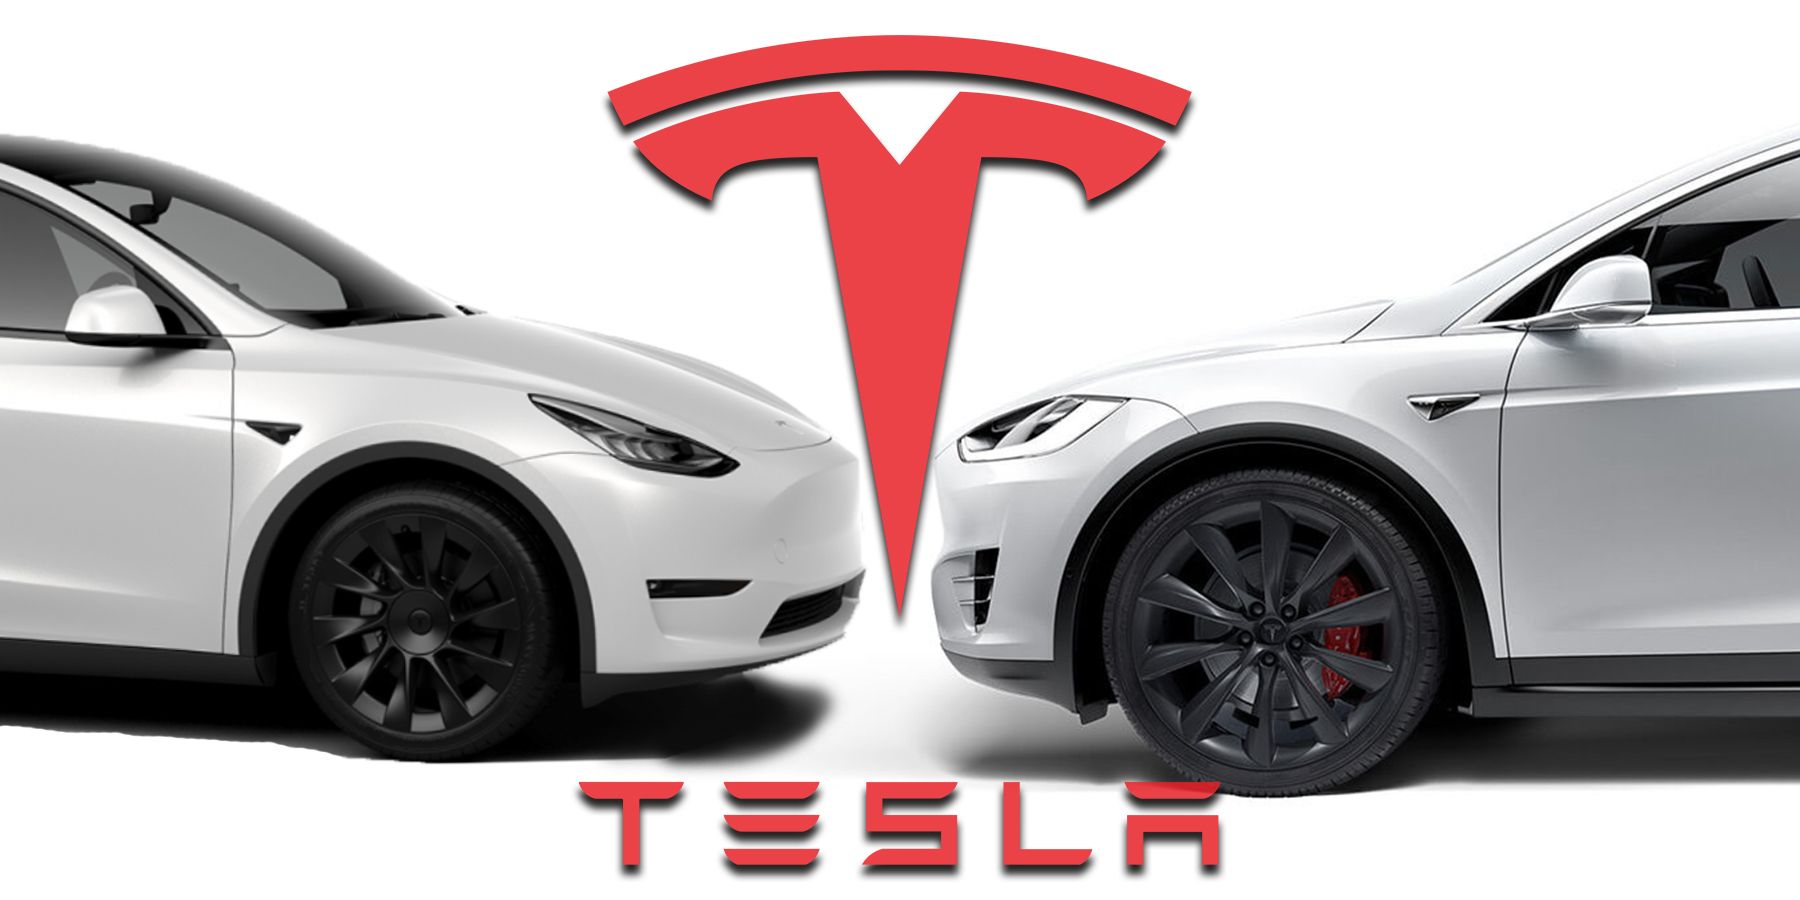 White Tesla electric cars